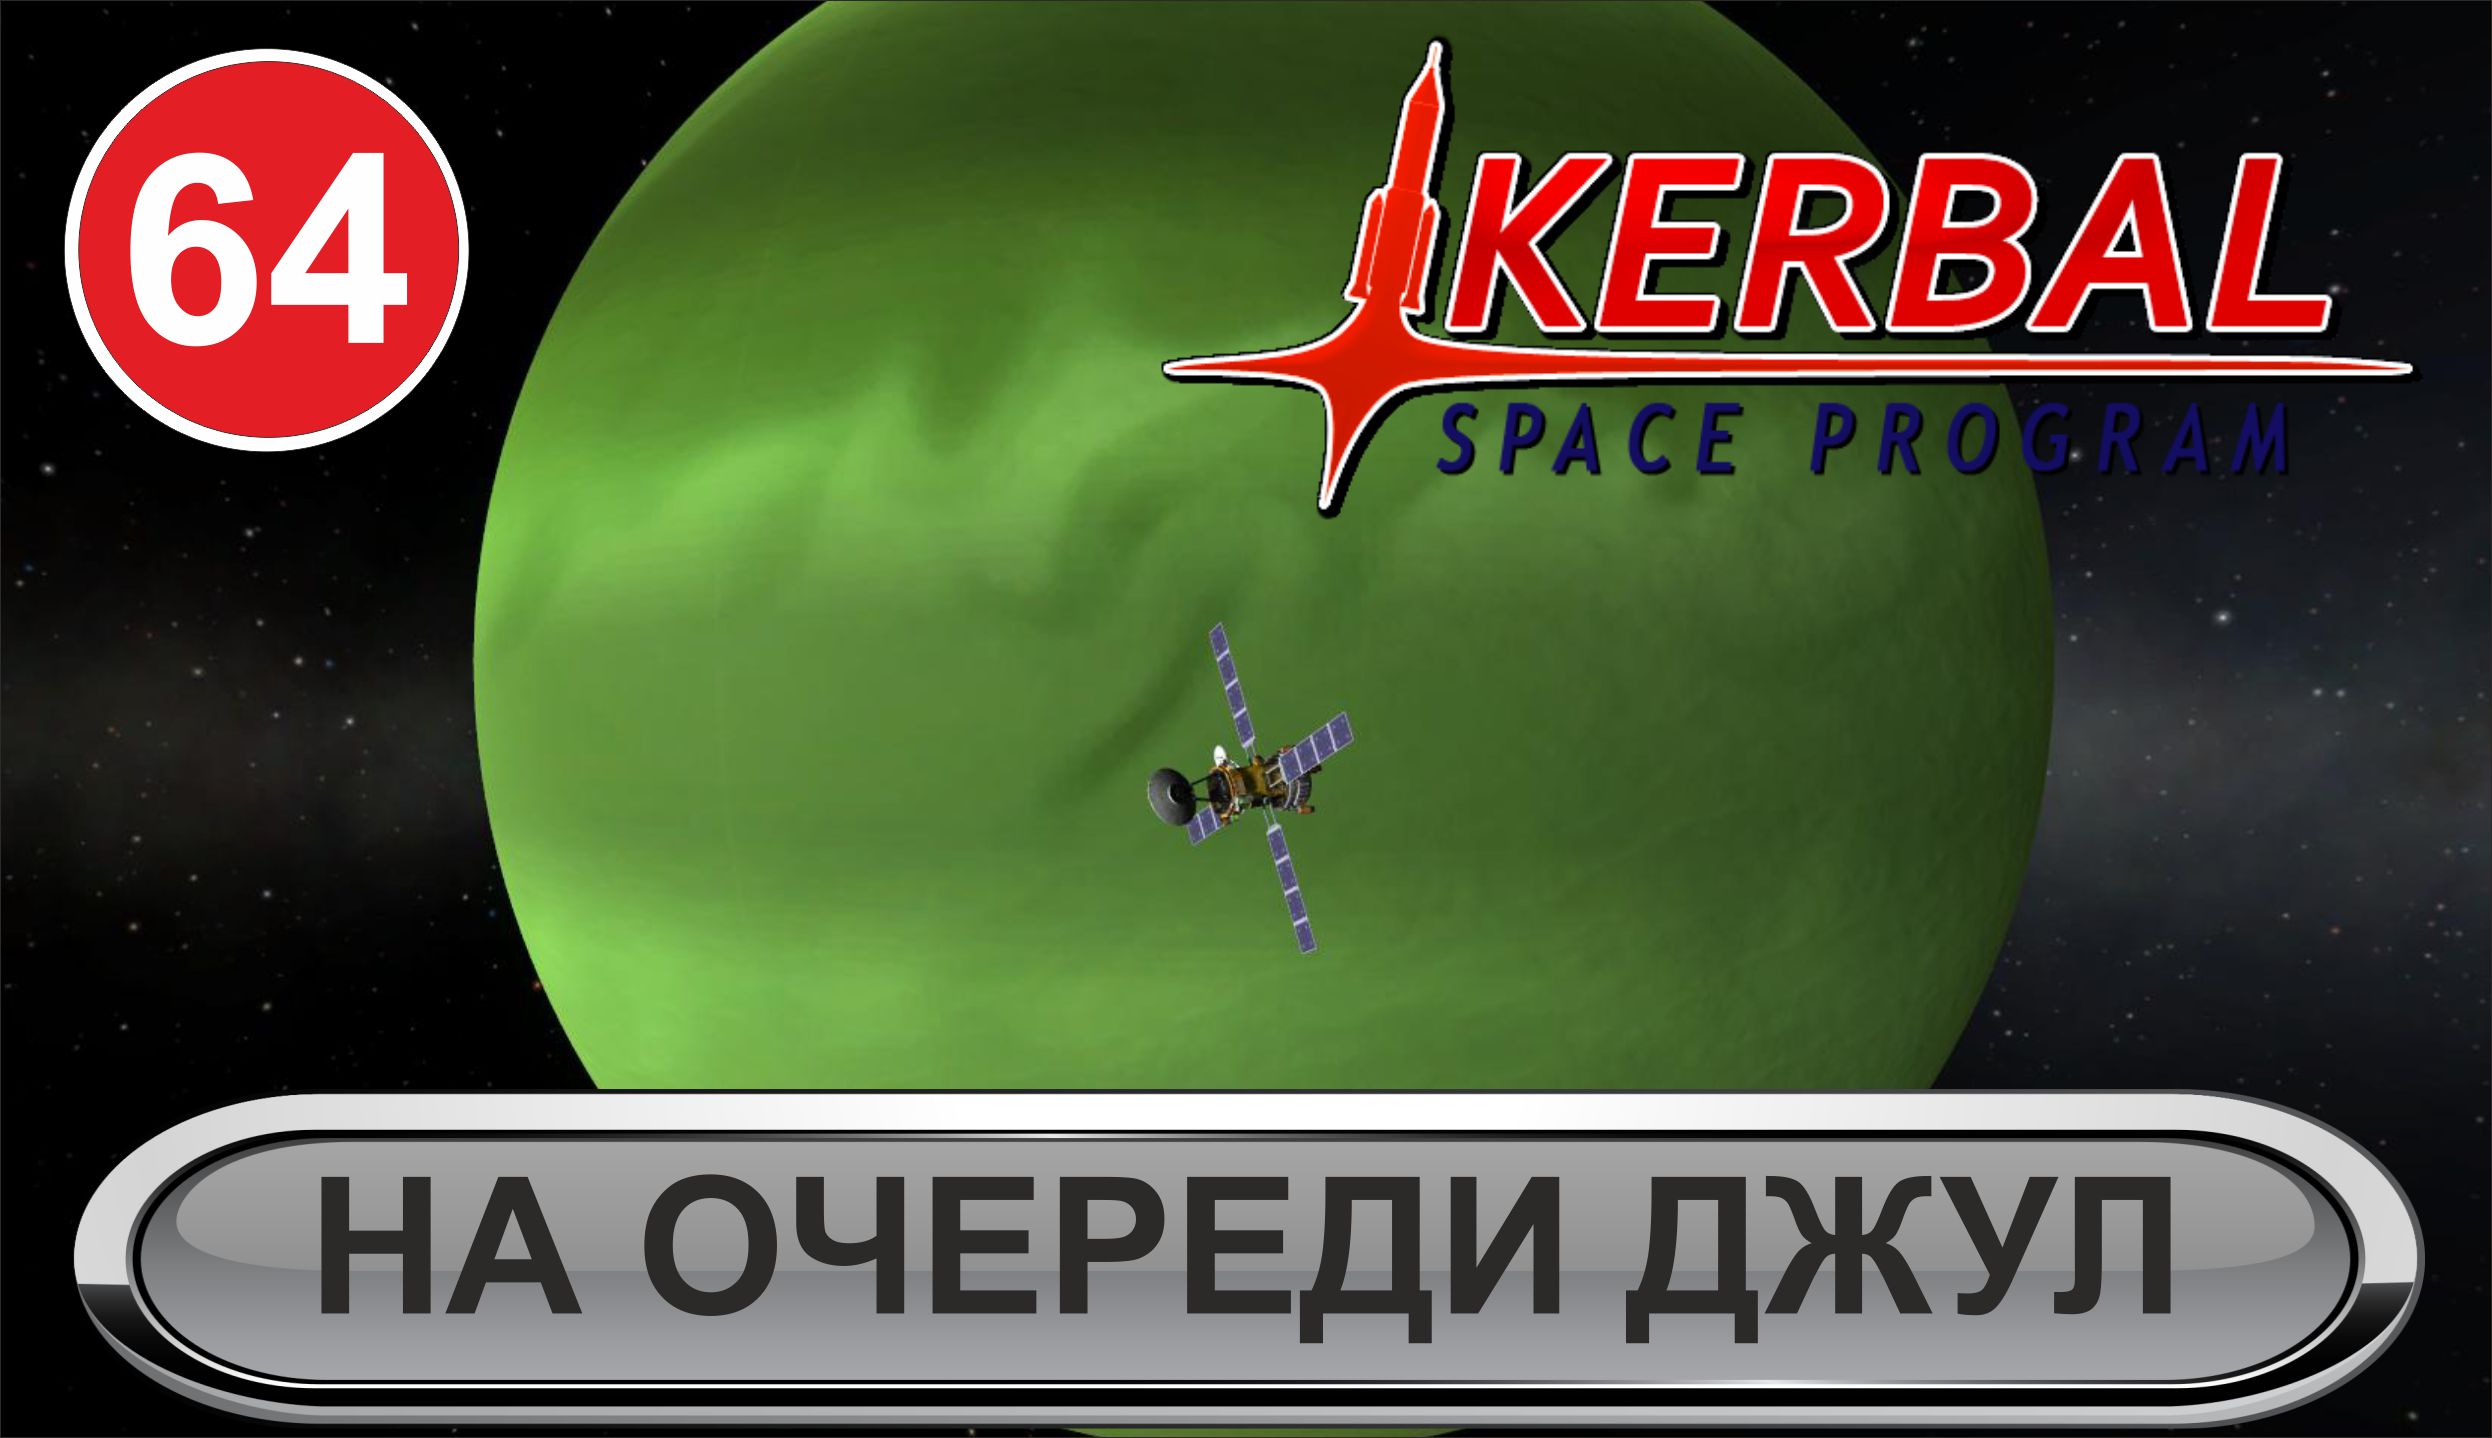 Kerbal Space Program - На очереди Джул